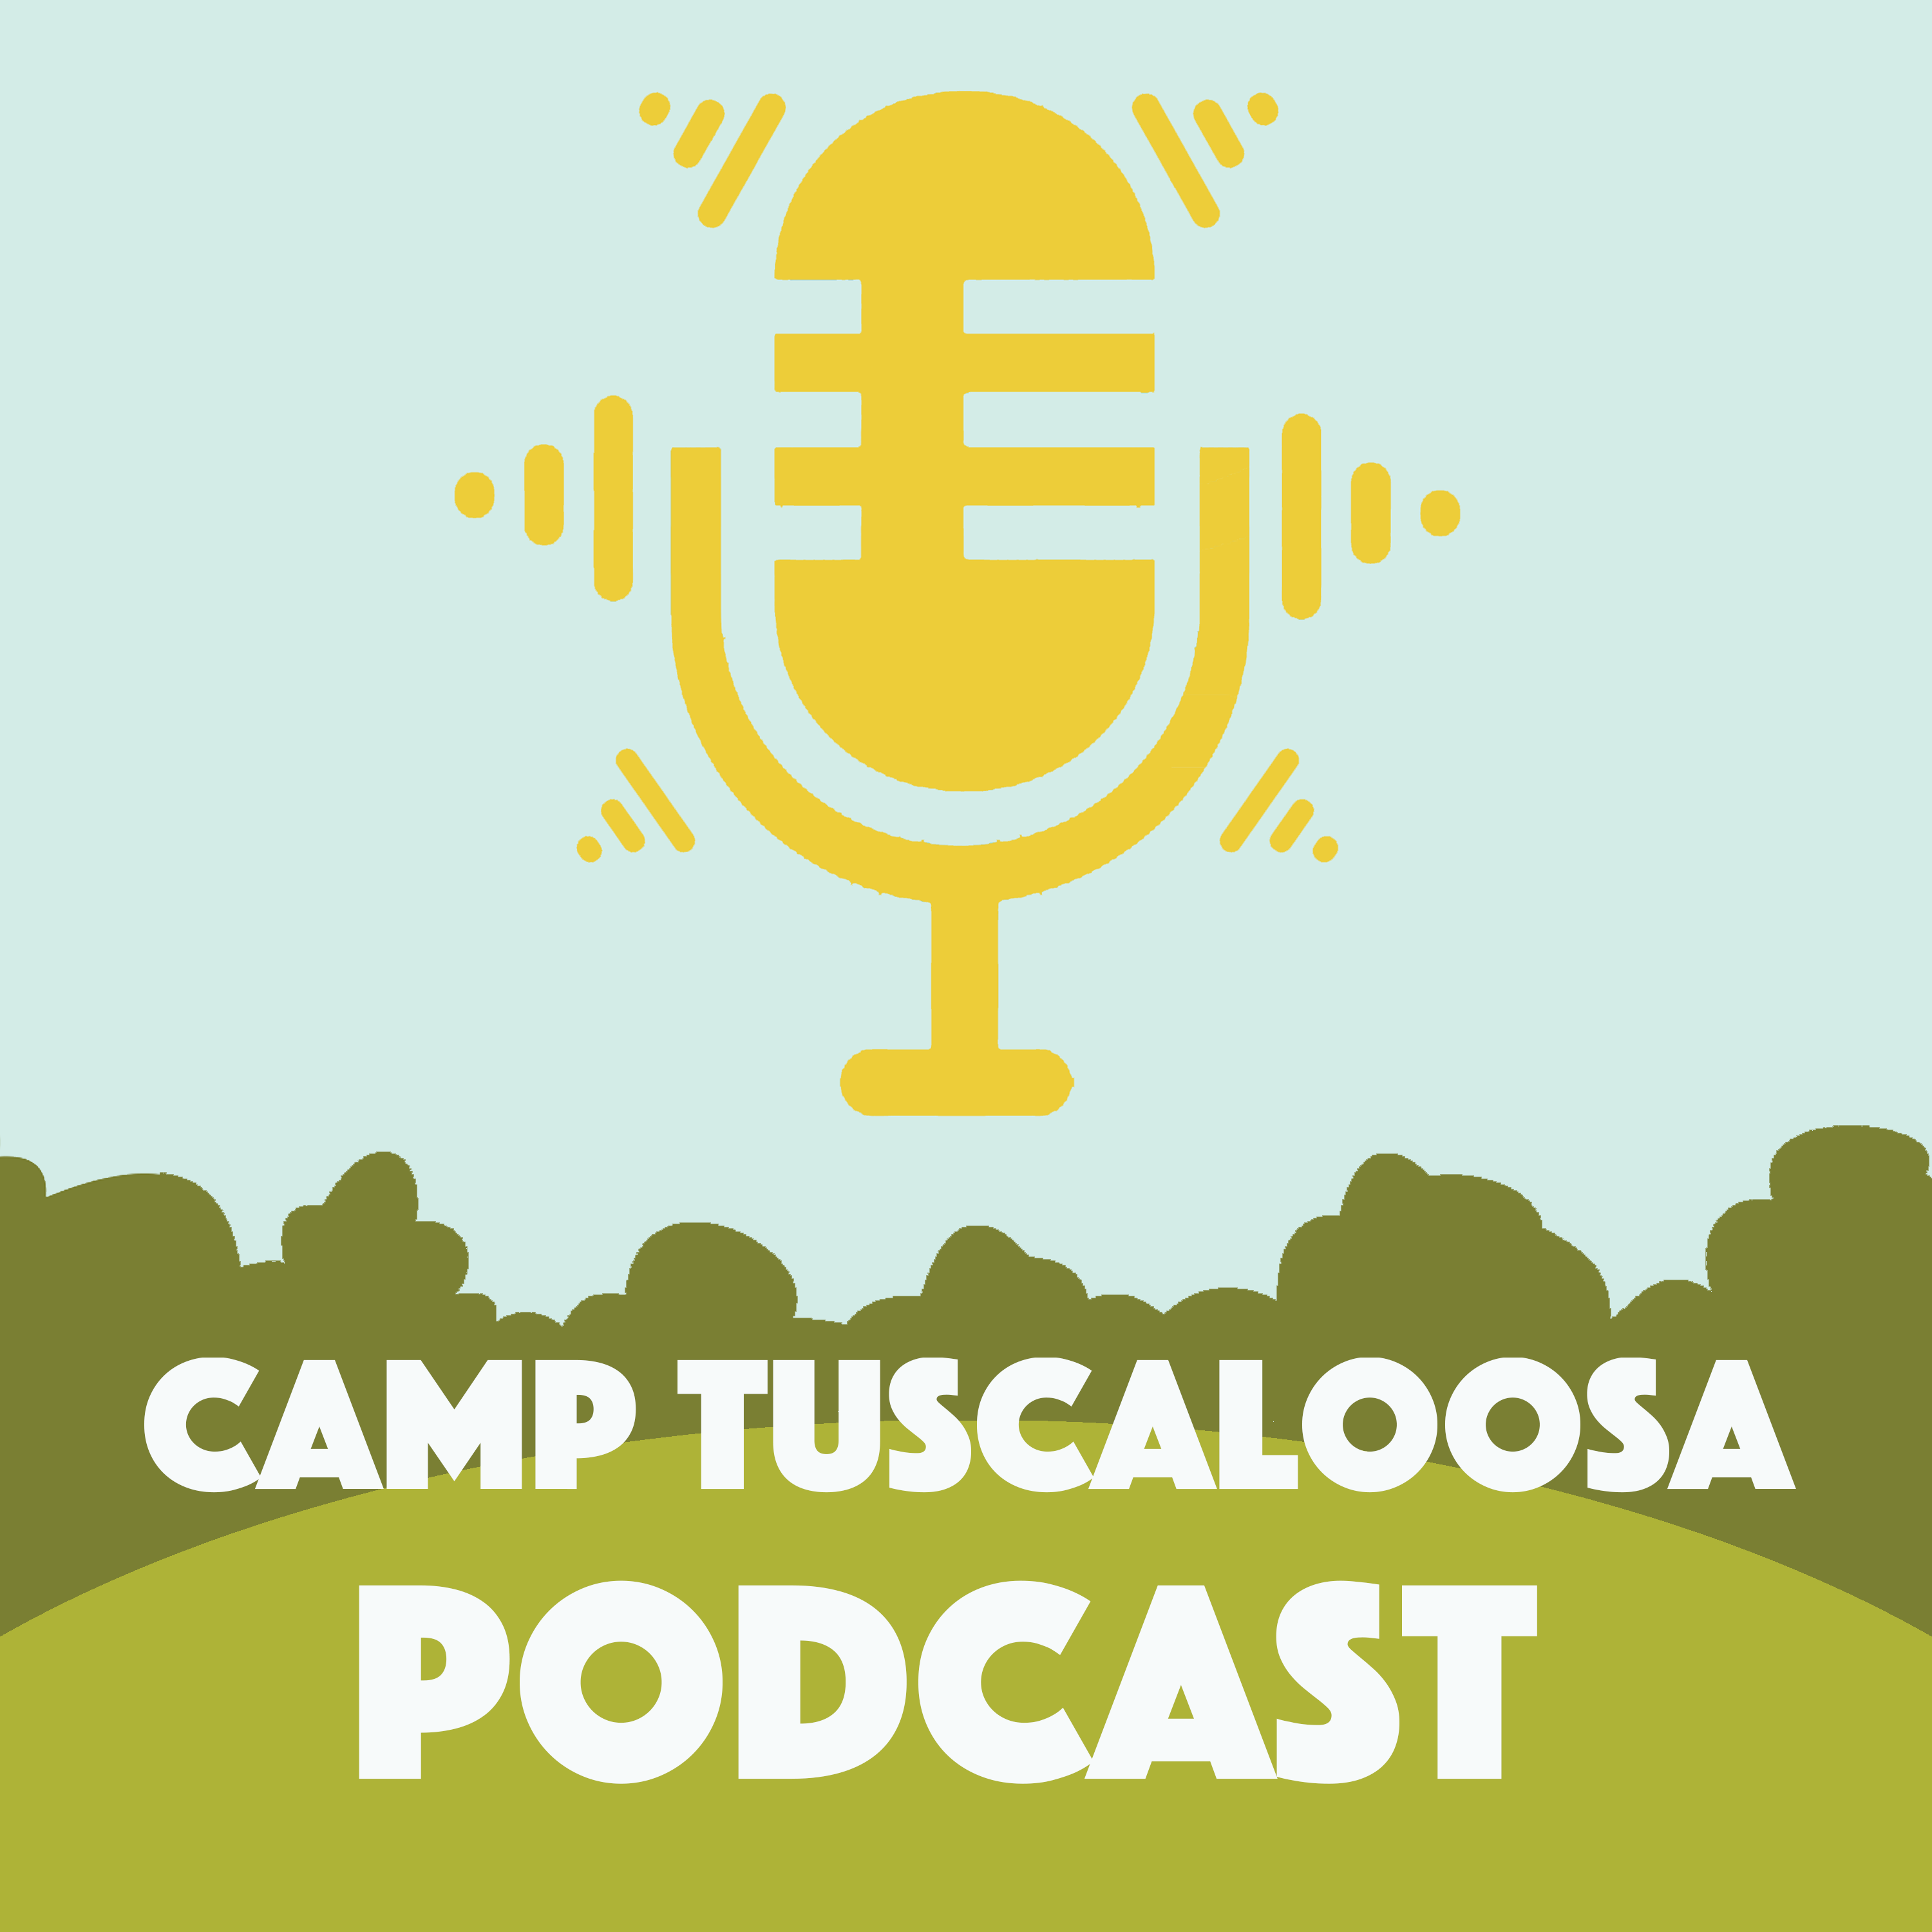 Camp Tuscaloosa Podcast